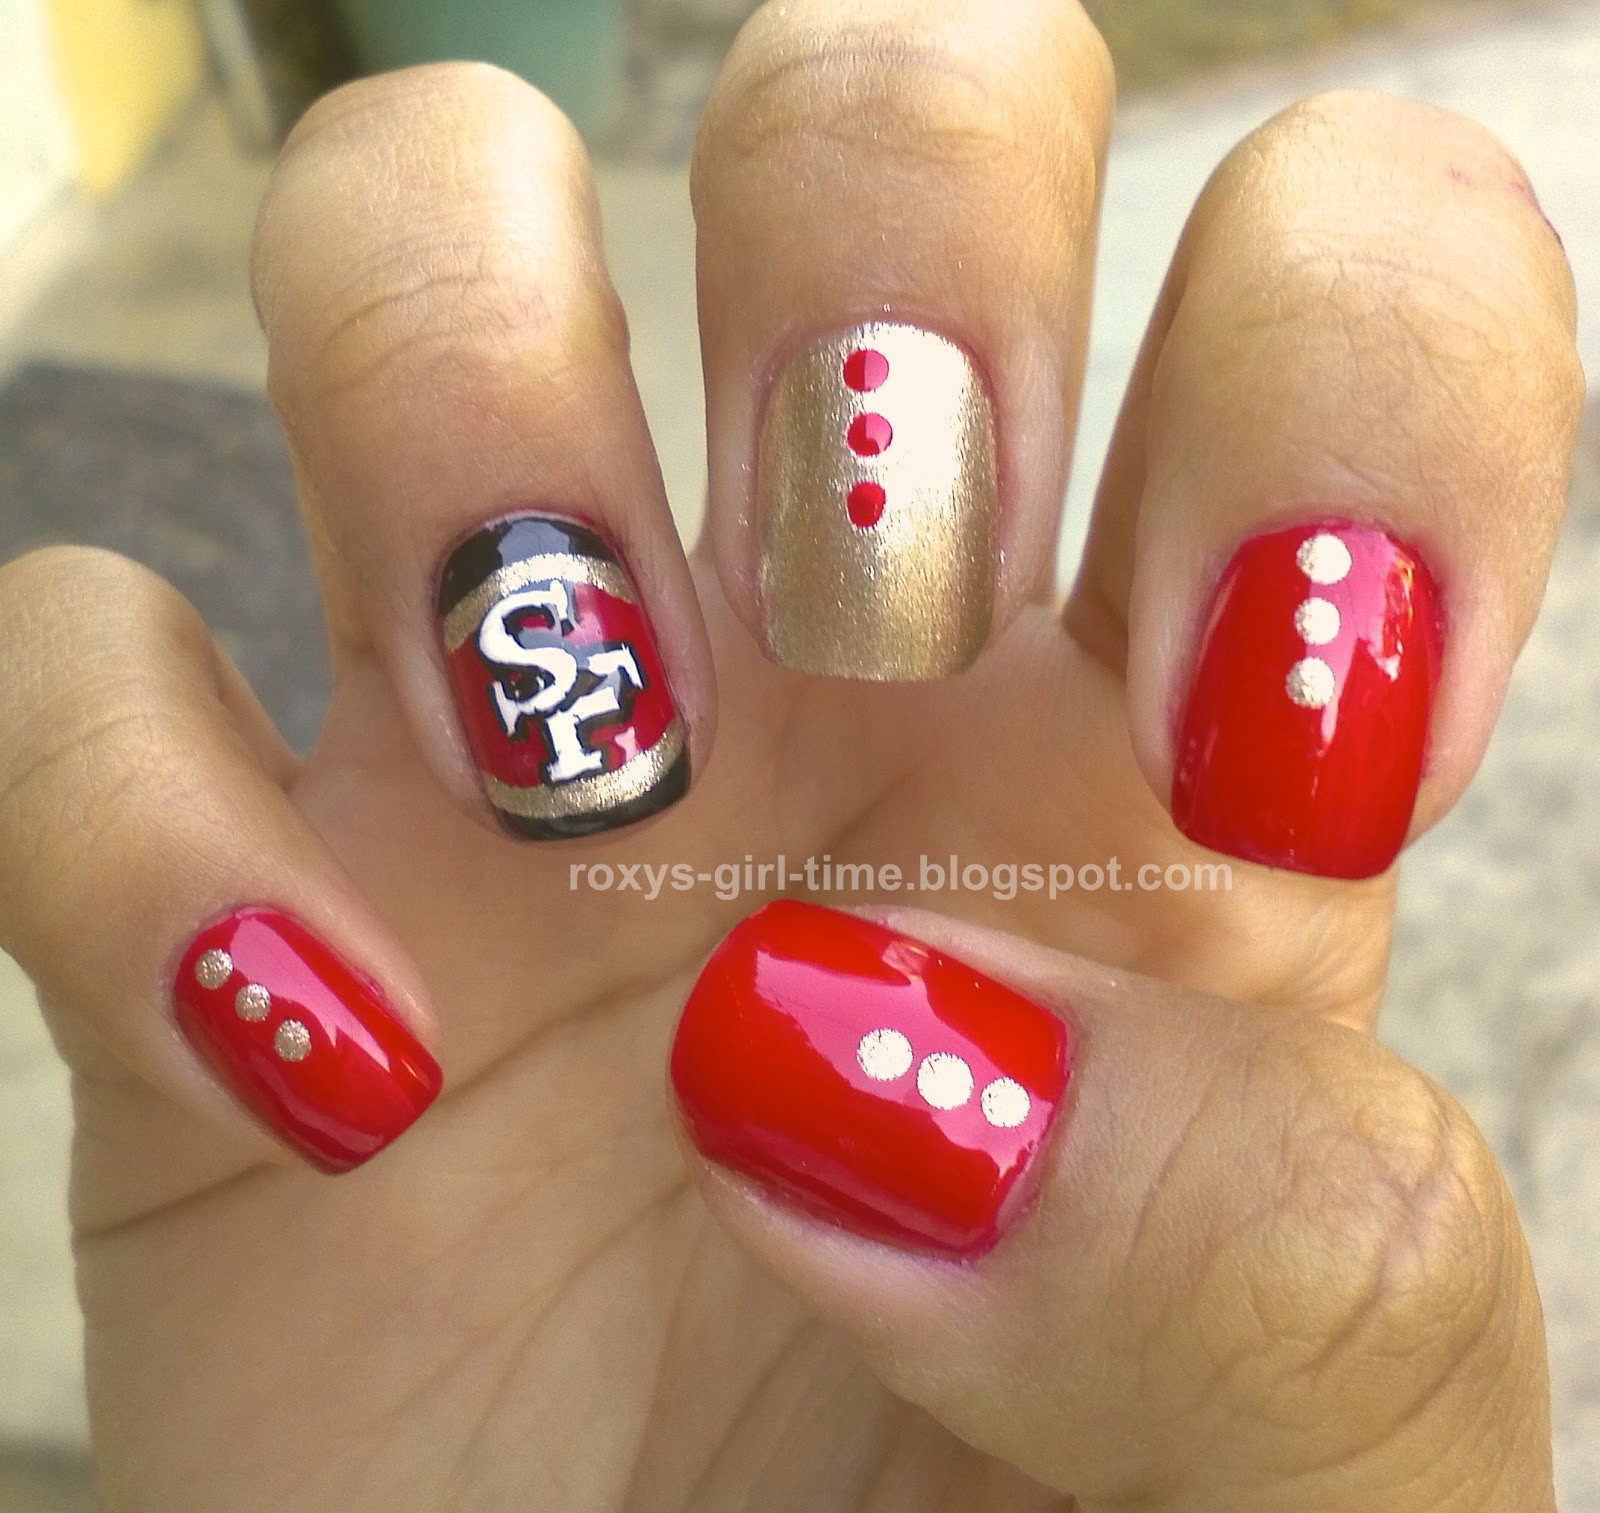 49er Nail Designs
 Roxy s Girl Time NOTD SF 49ers Nail Art